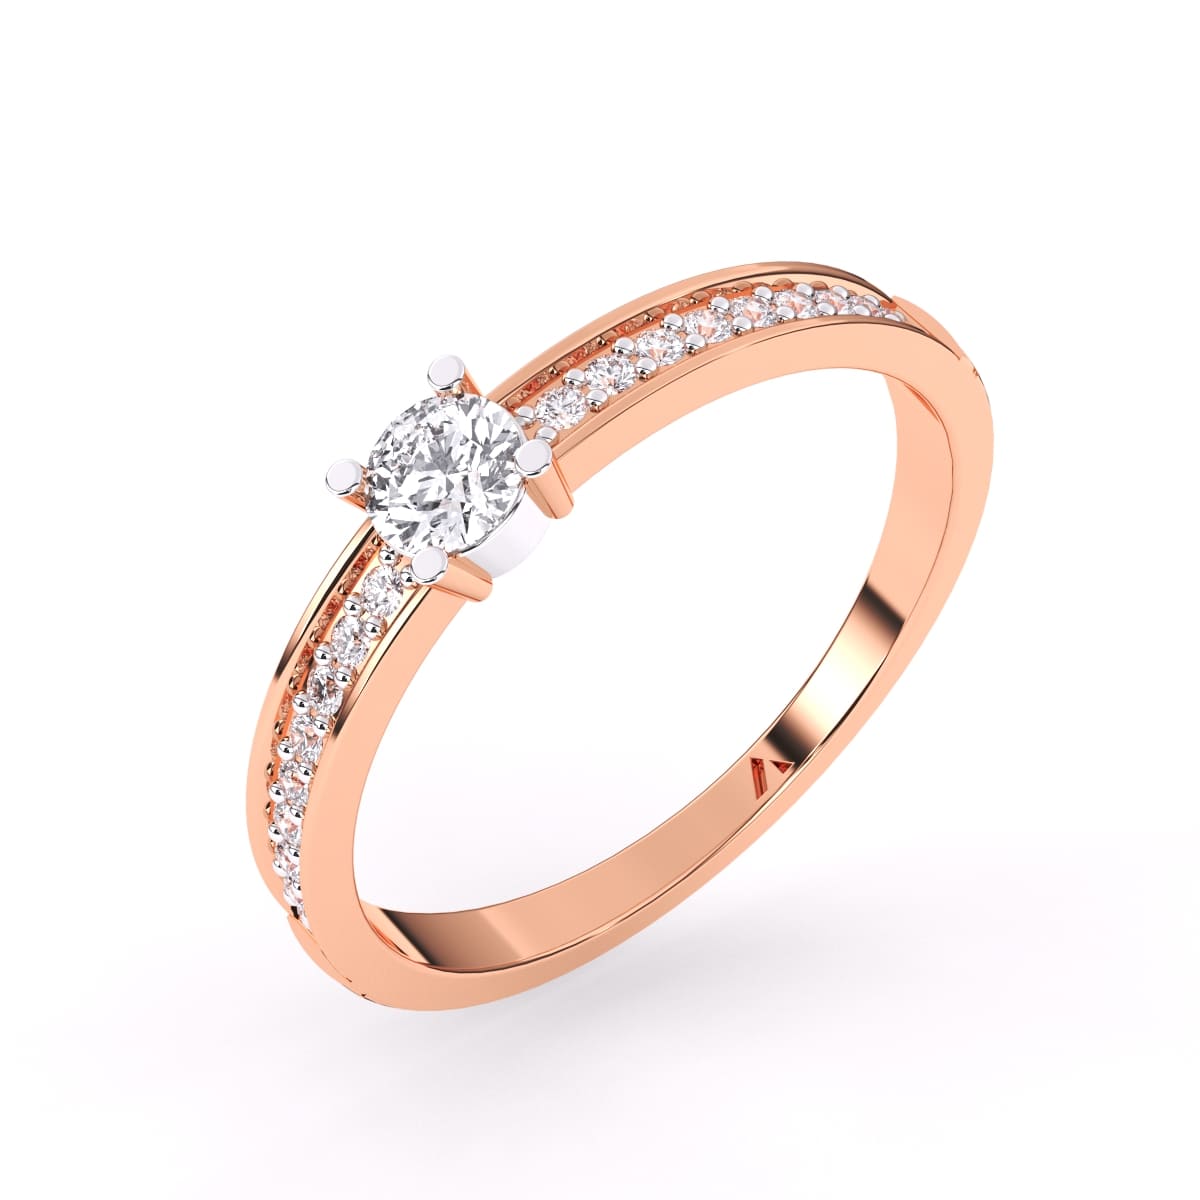 Minimalist Engagement Ring Silver Wedding Band - Eleganzia Jewelry